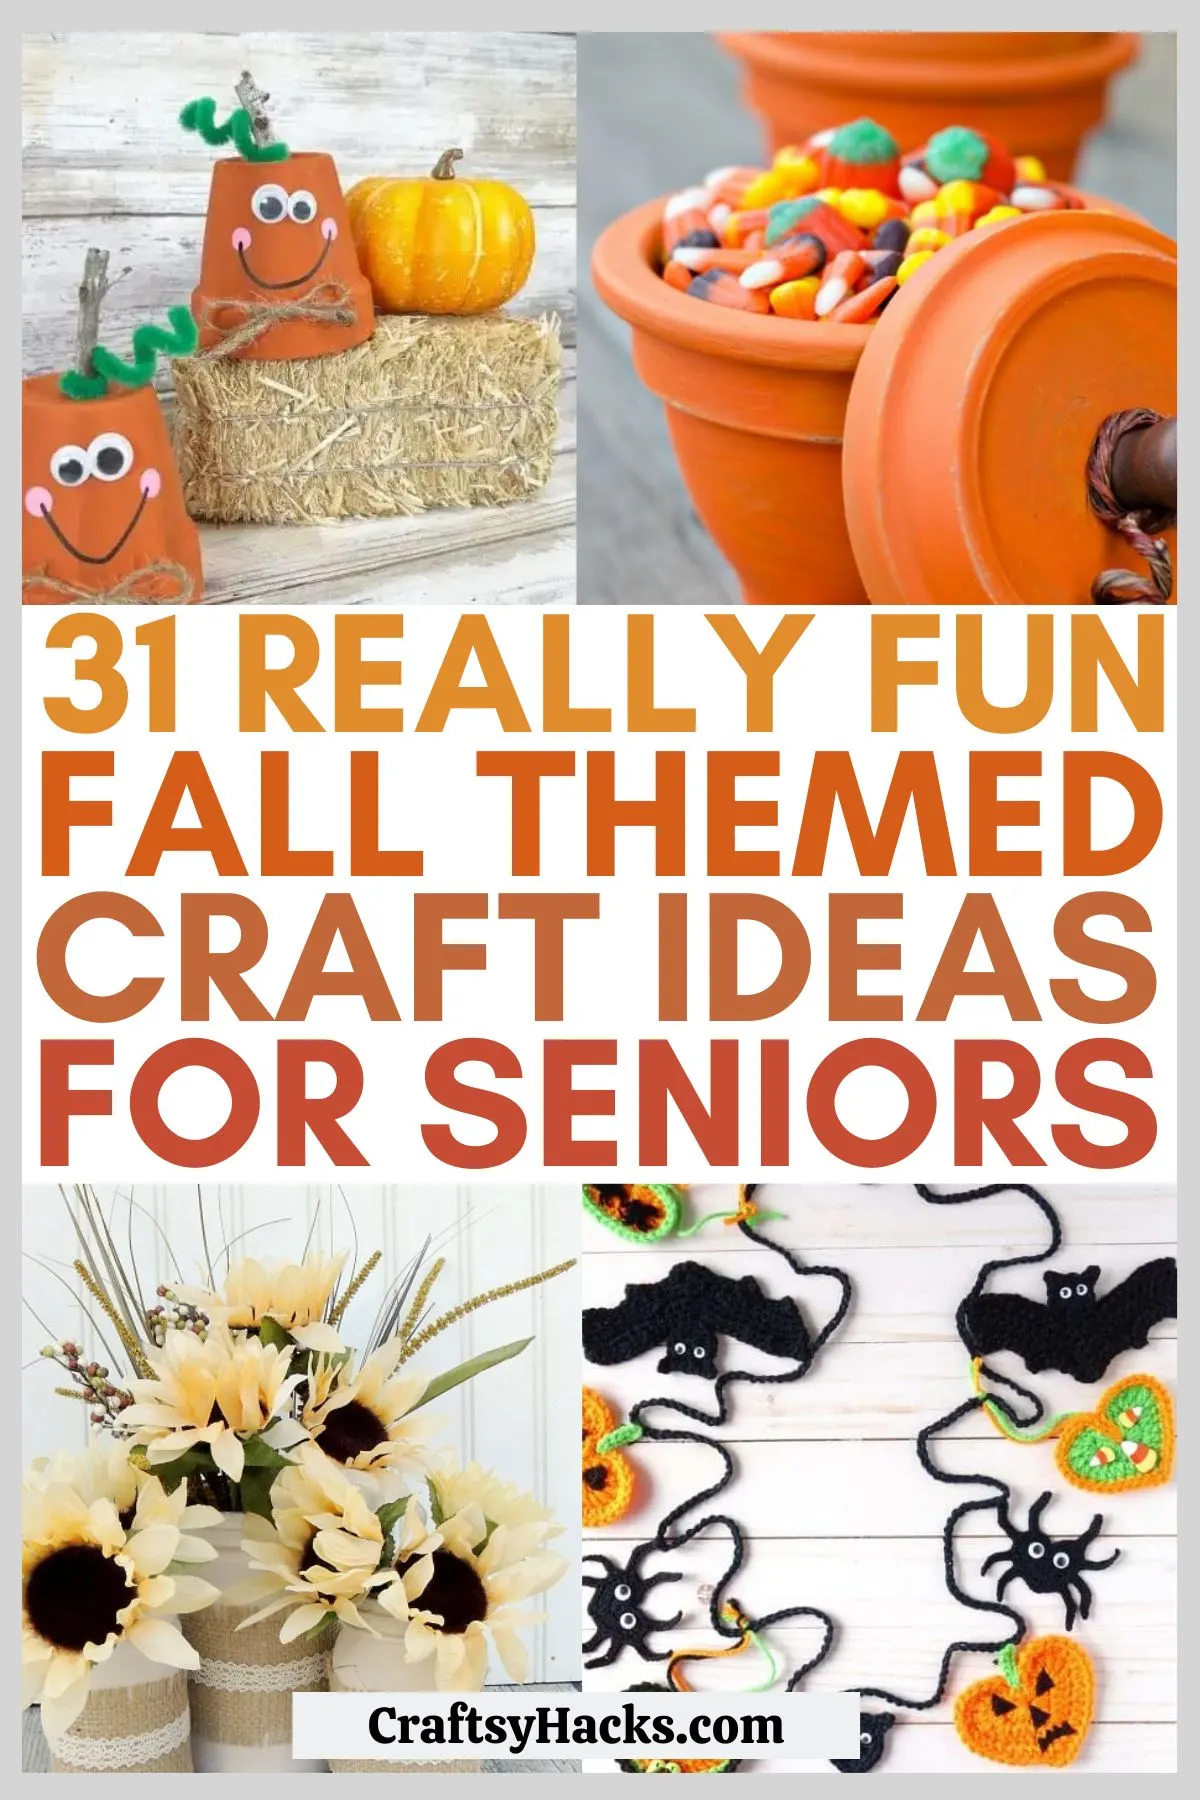 31 Fall Crafts for Seniors - Craftsy Hacks